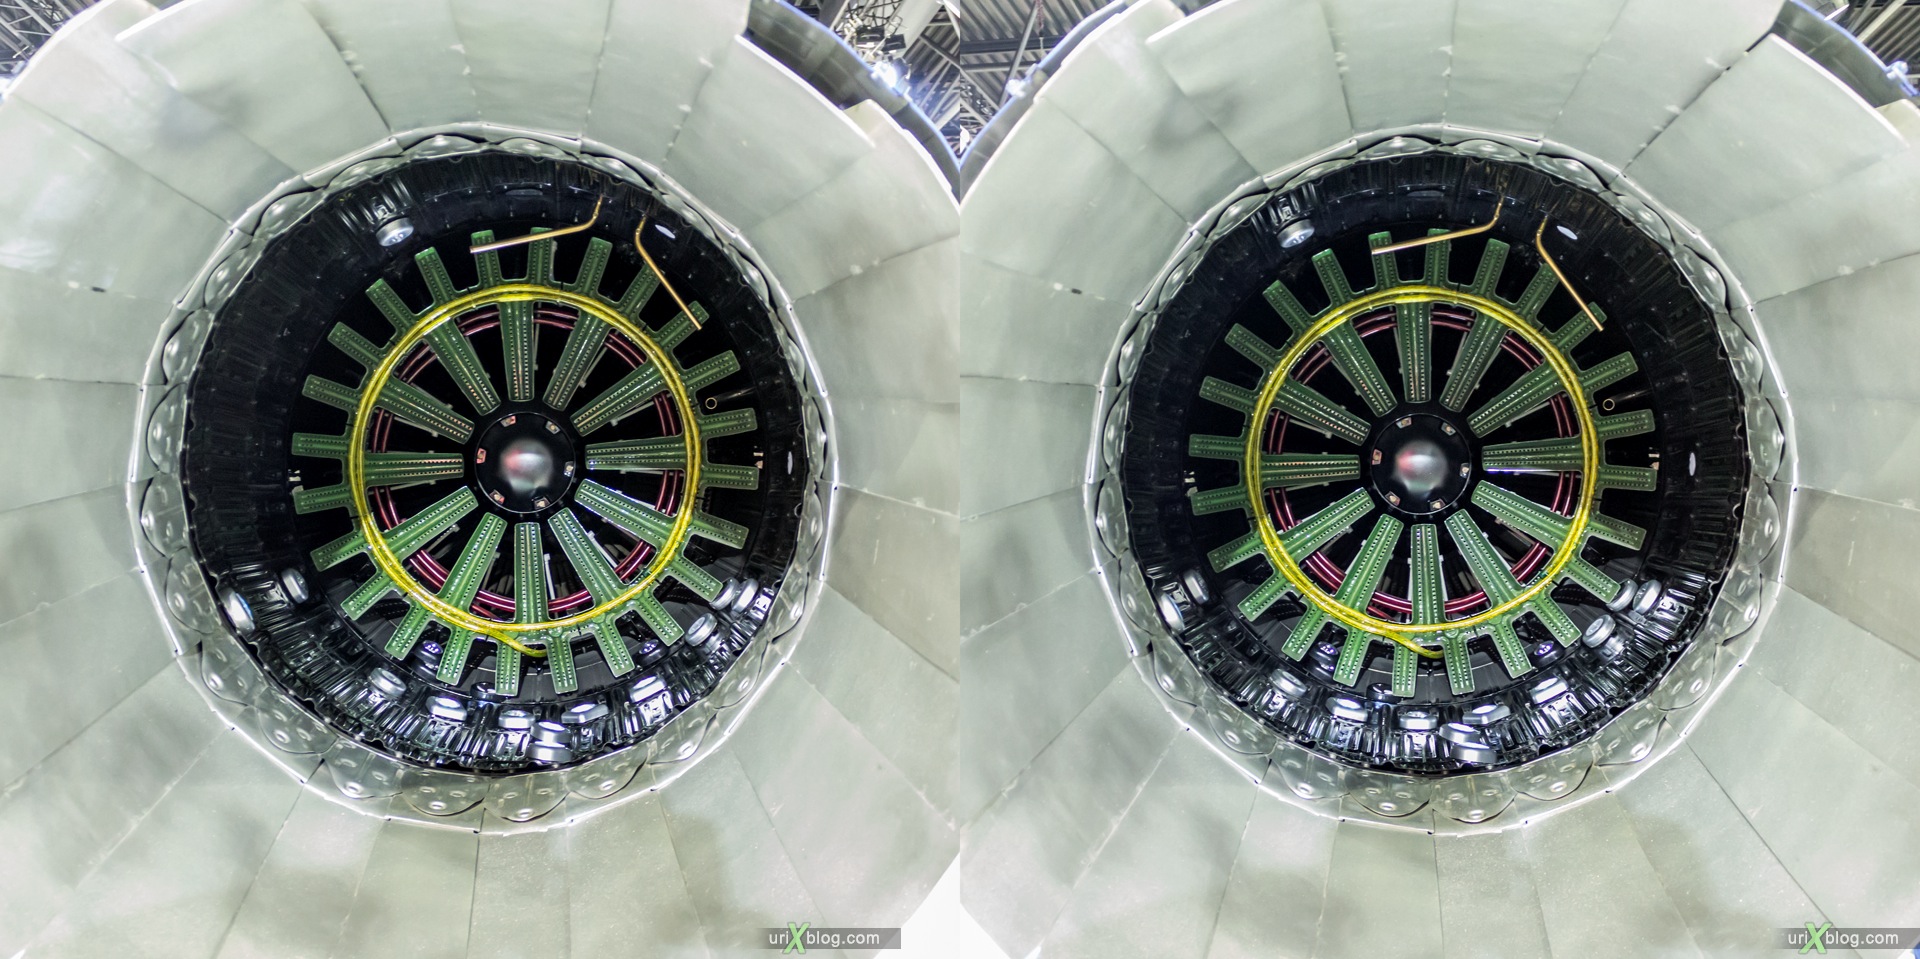 2013, MAKS, International Aviation and Space Salon, Russia, Ramenskoye airfield, airplane, engine, turbine, 3D, stereo pair, cross-eyed, crossview, cross view stereo pair, stereoscopic